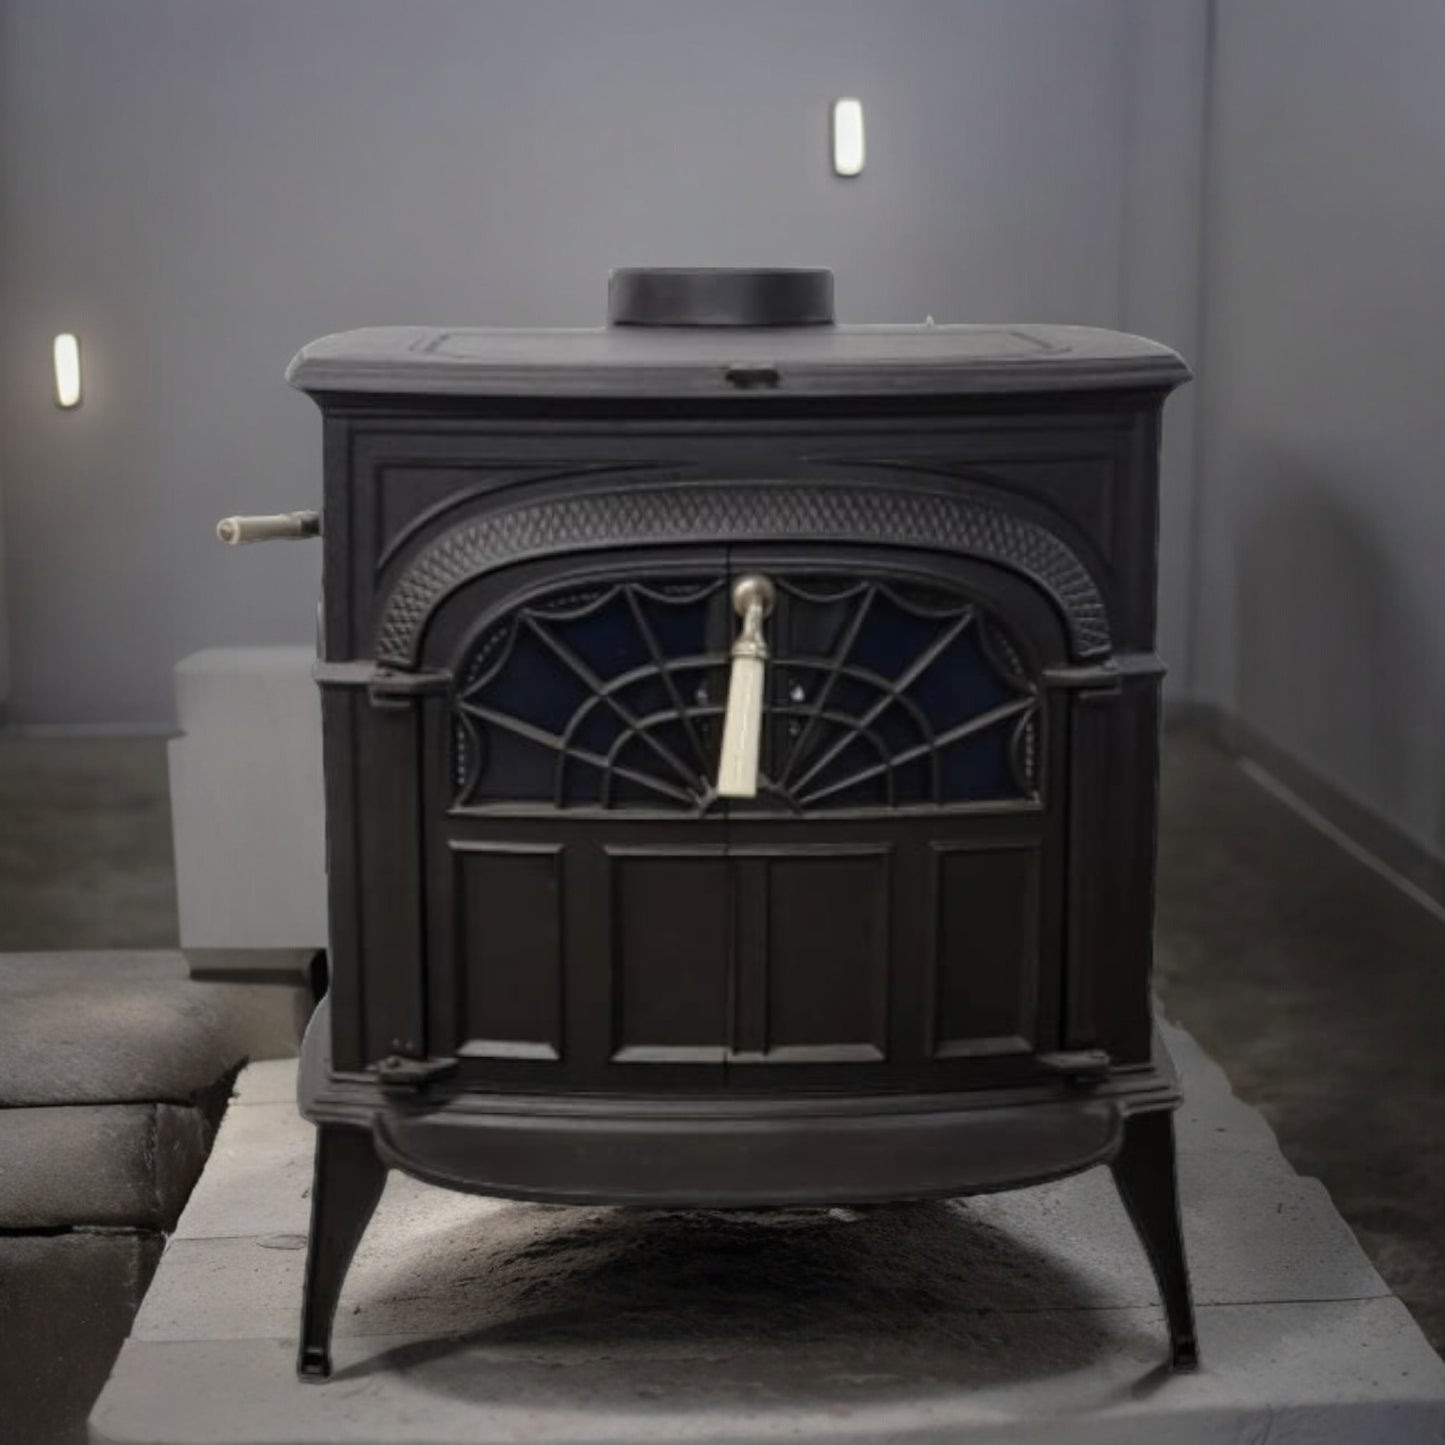 vermont castings intrepid wood stove 